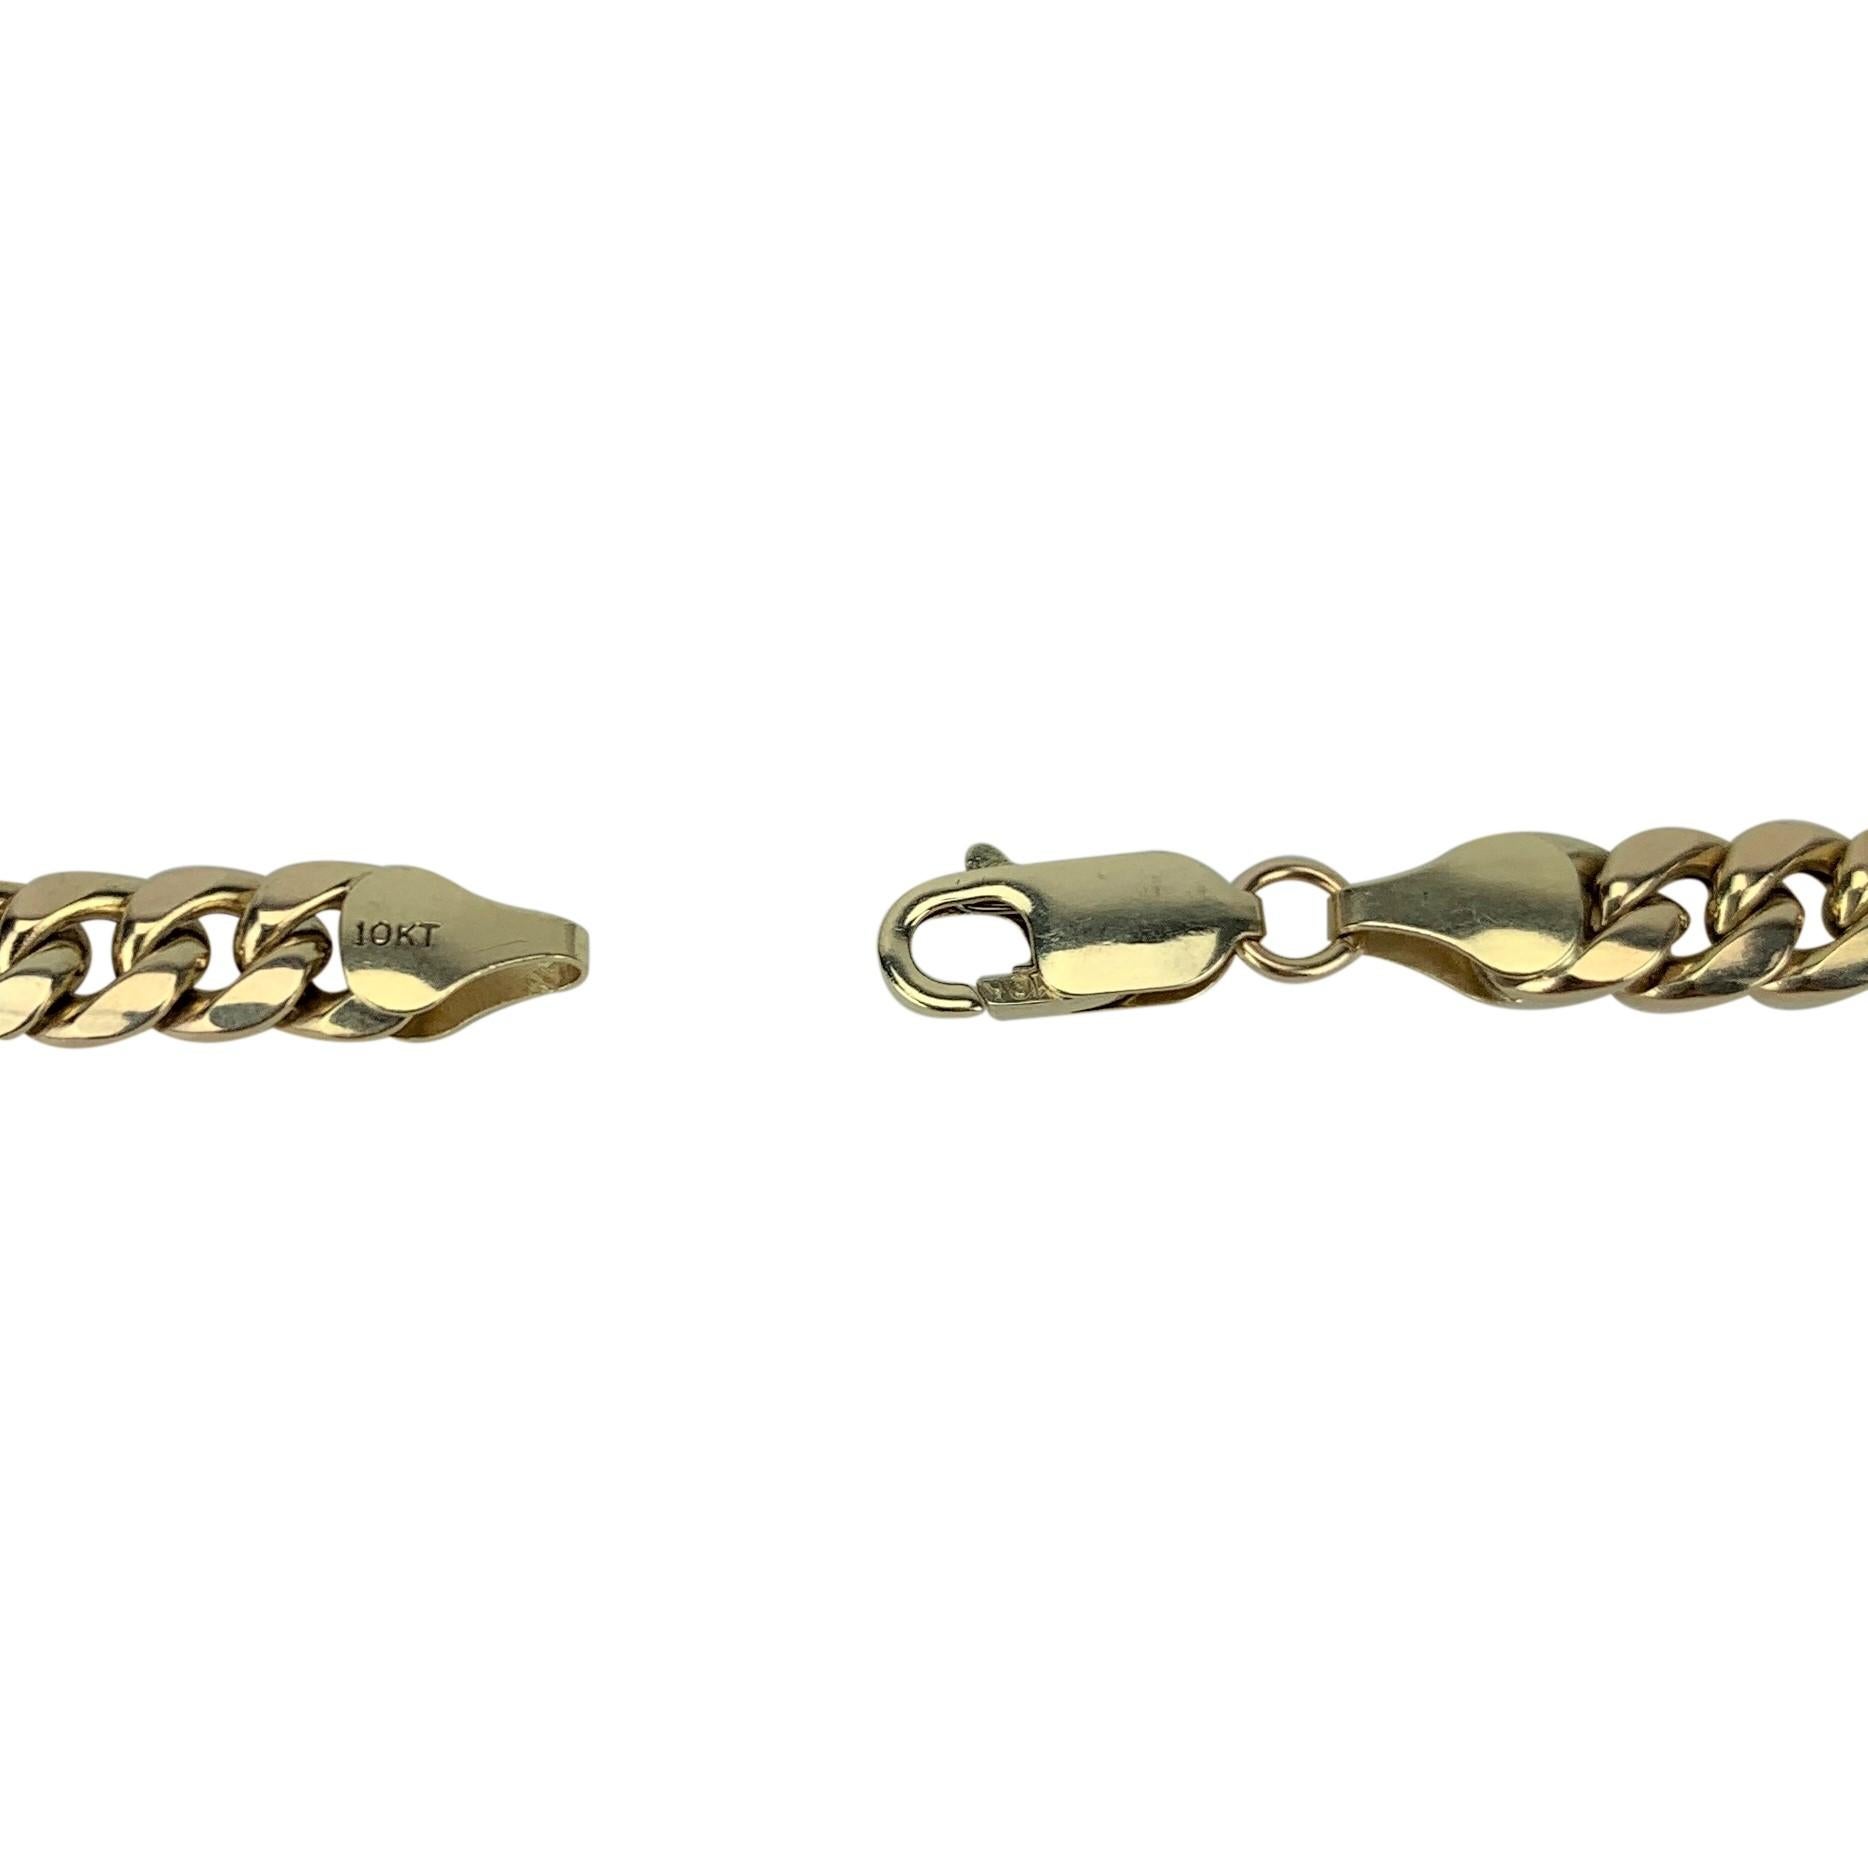 10 Karat Yellow Gold Hollow Cuban Curb Link Chain Necklace 3